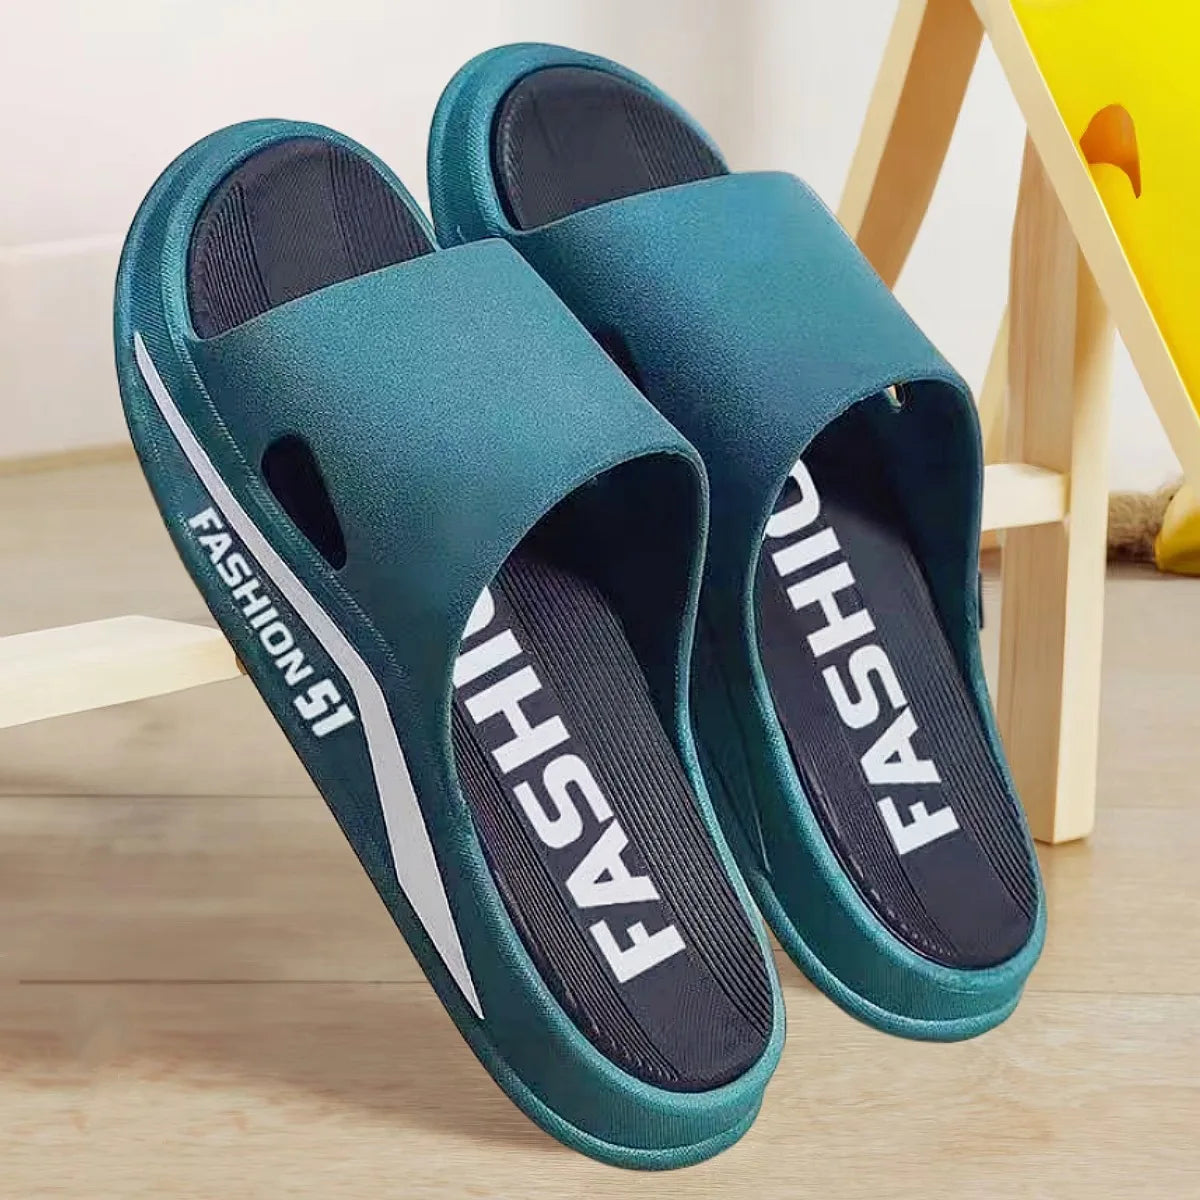 Canmol Men's Summer Slides: Stylish EVA Soft Bottom Beach Sandals & Slippers